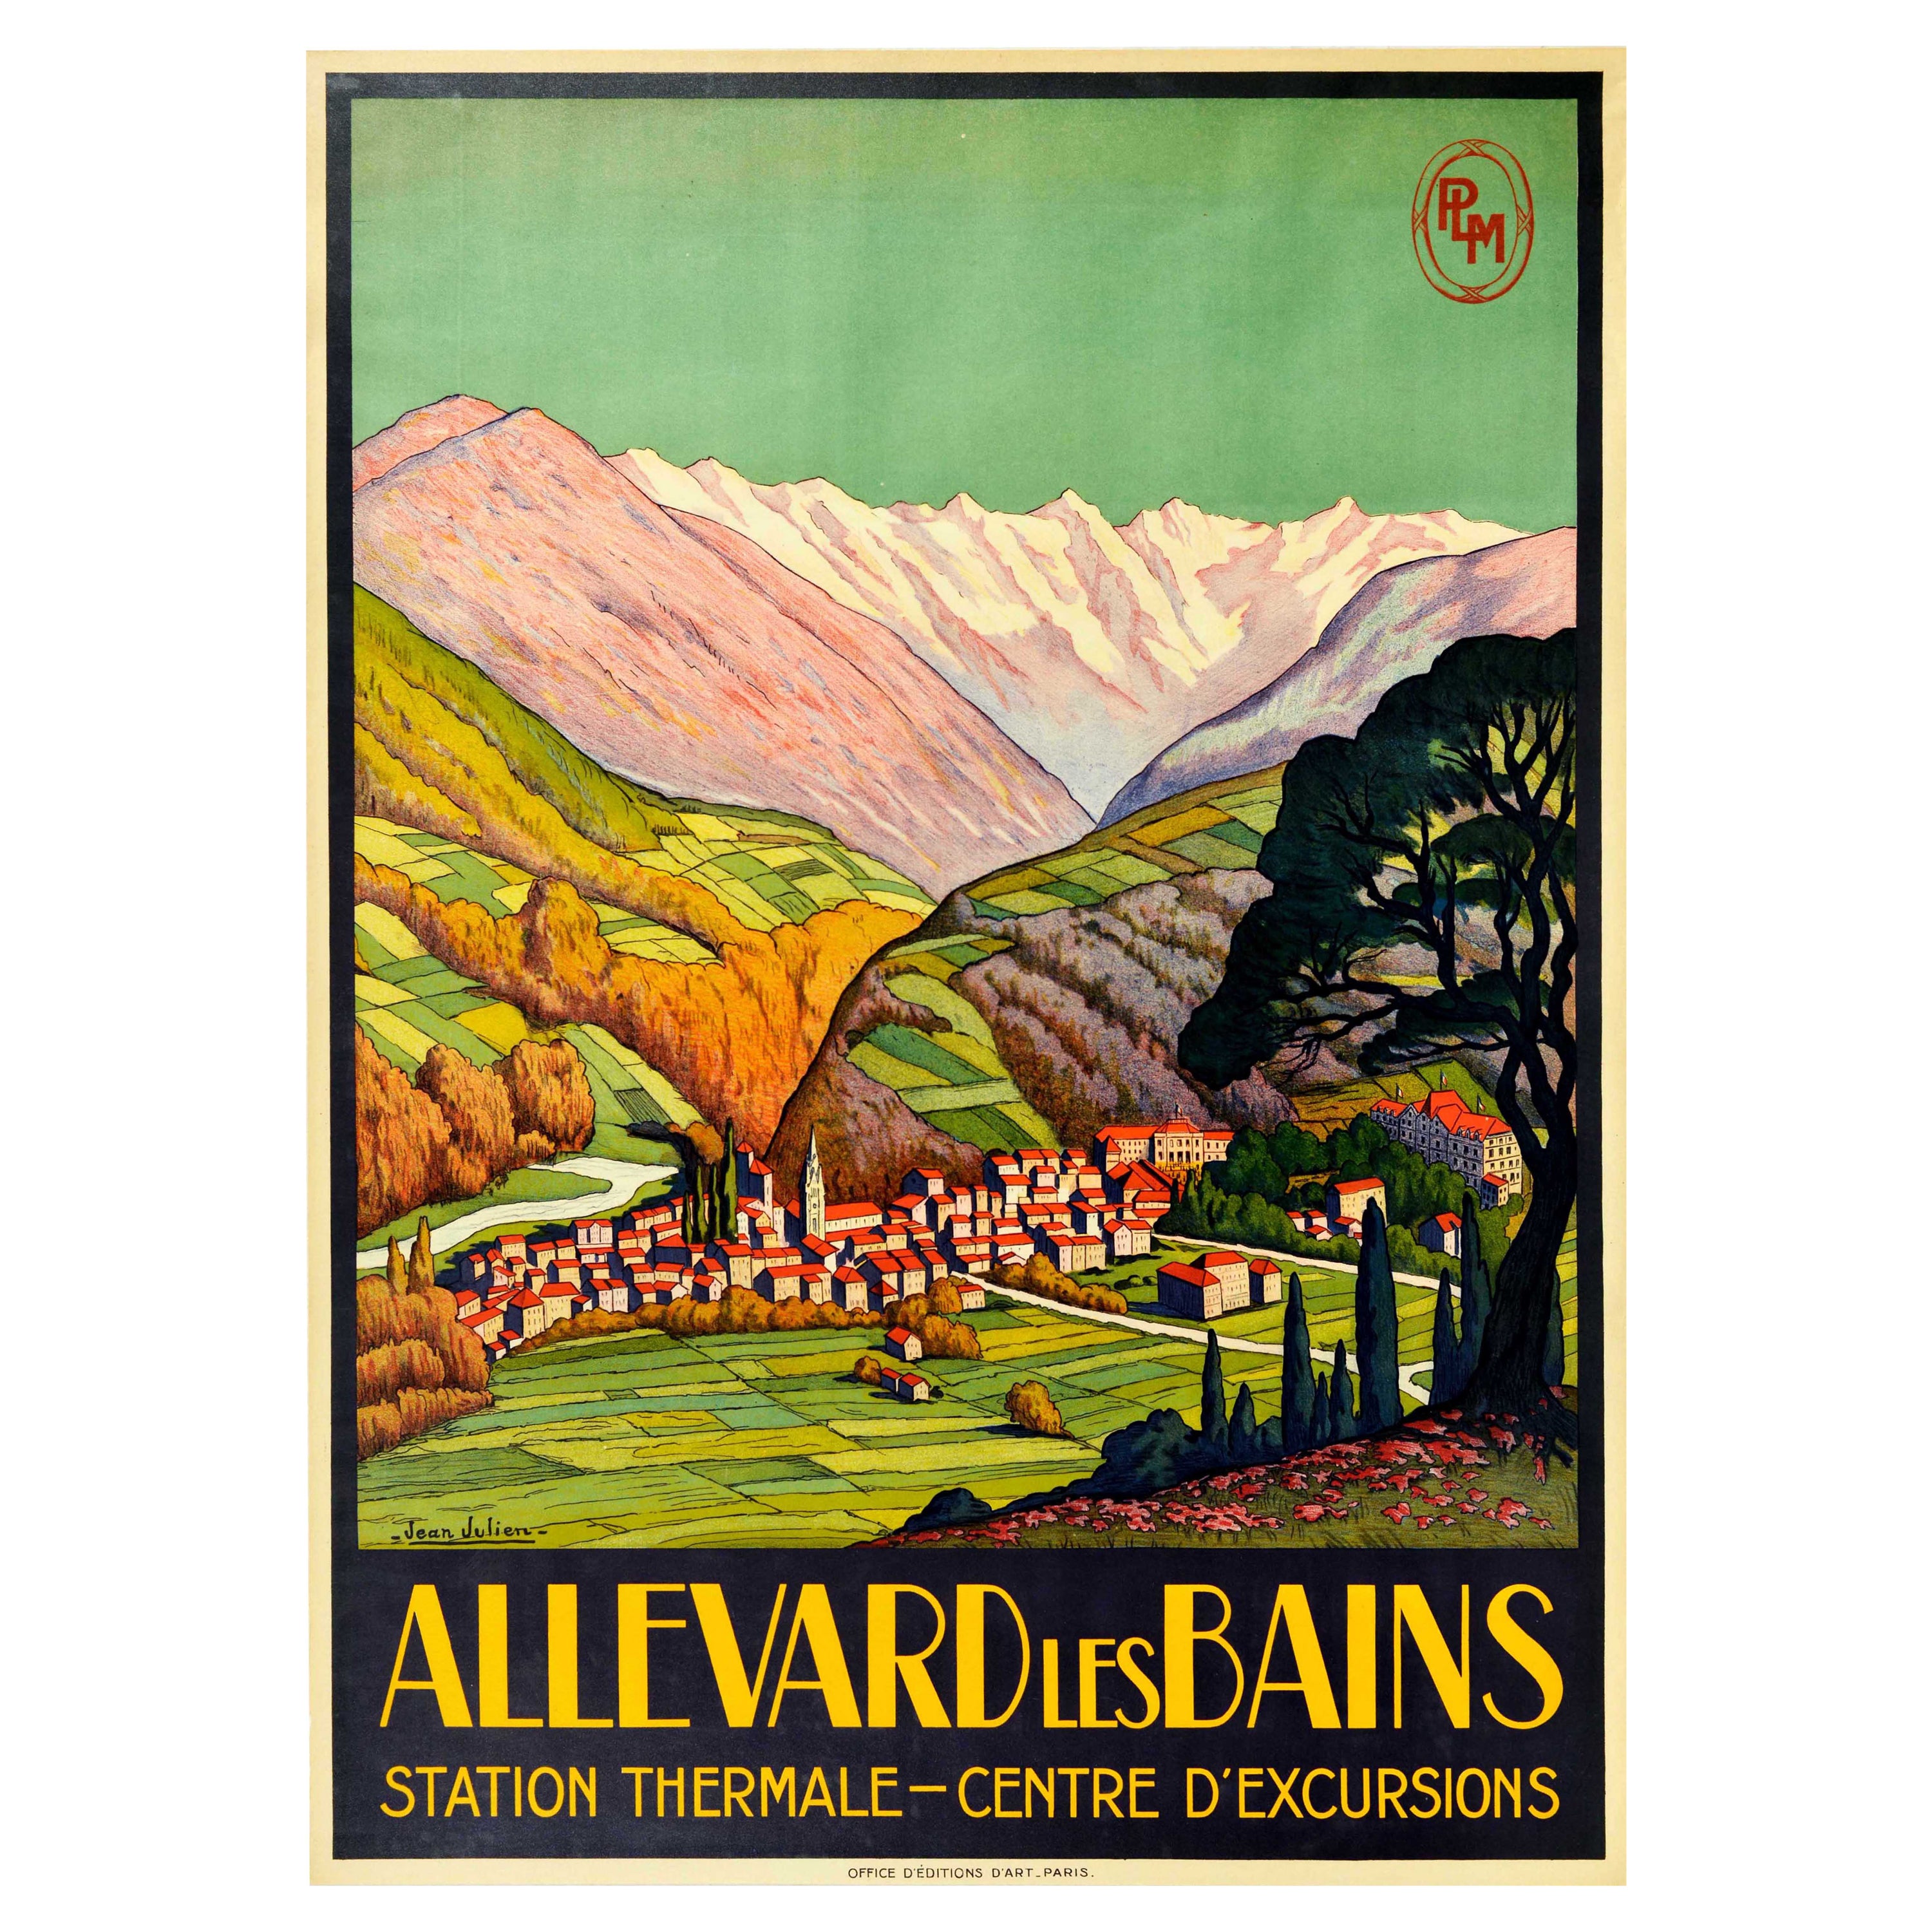 Original Vintage PLM Railway Travel Poster Allevard Les Bains Thermal Spa Alps For Sale